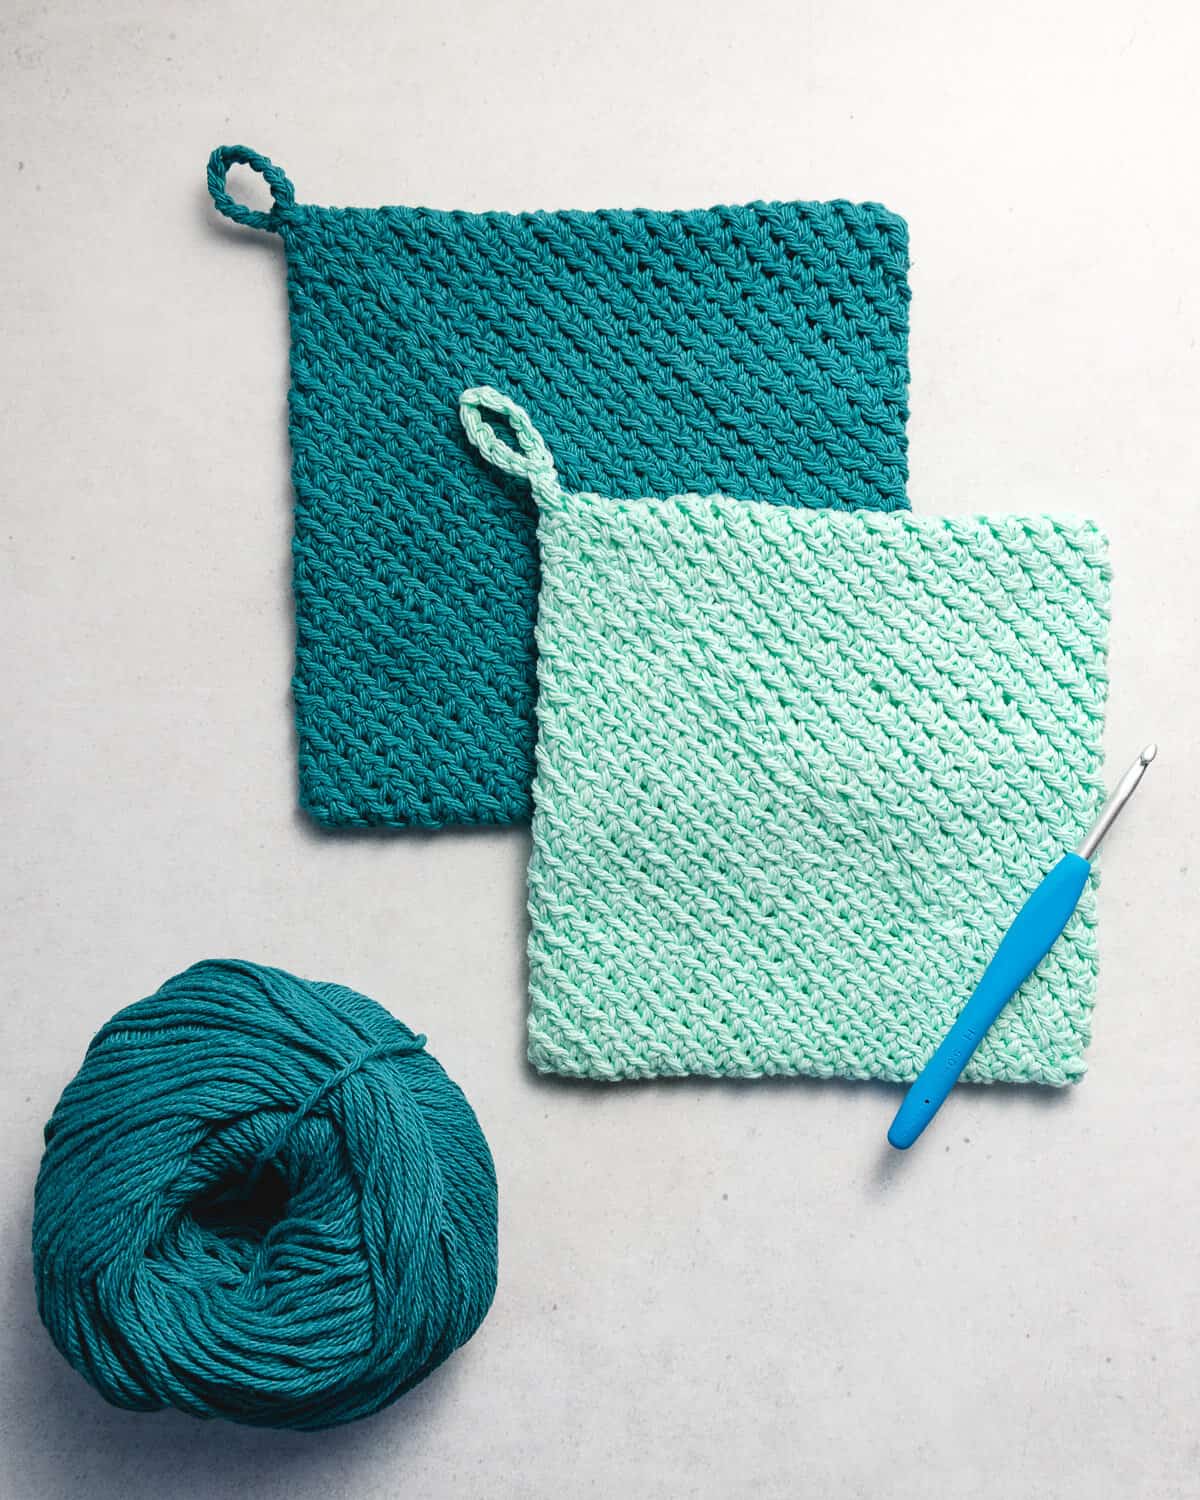 16 Free Crochet Potholder Patterns - My Crochet Space